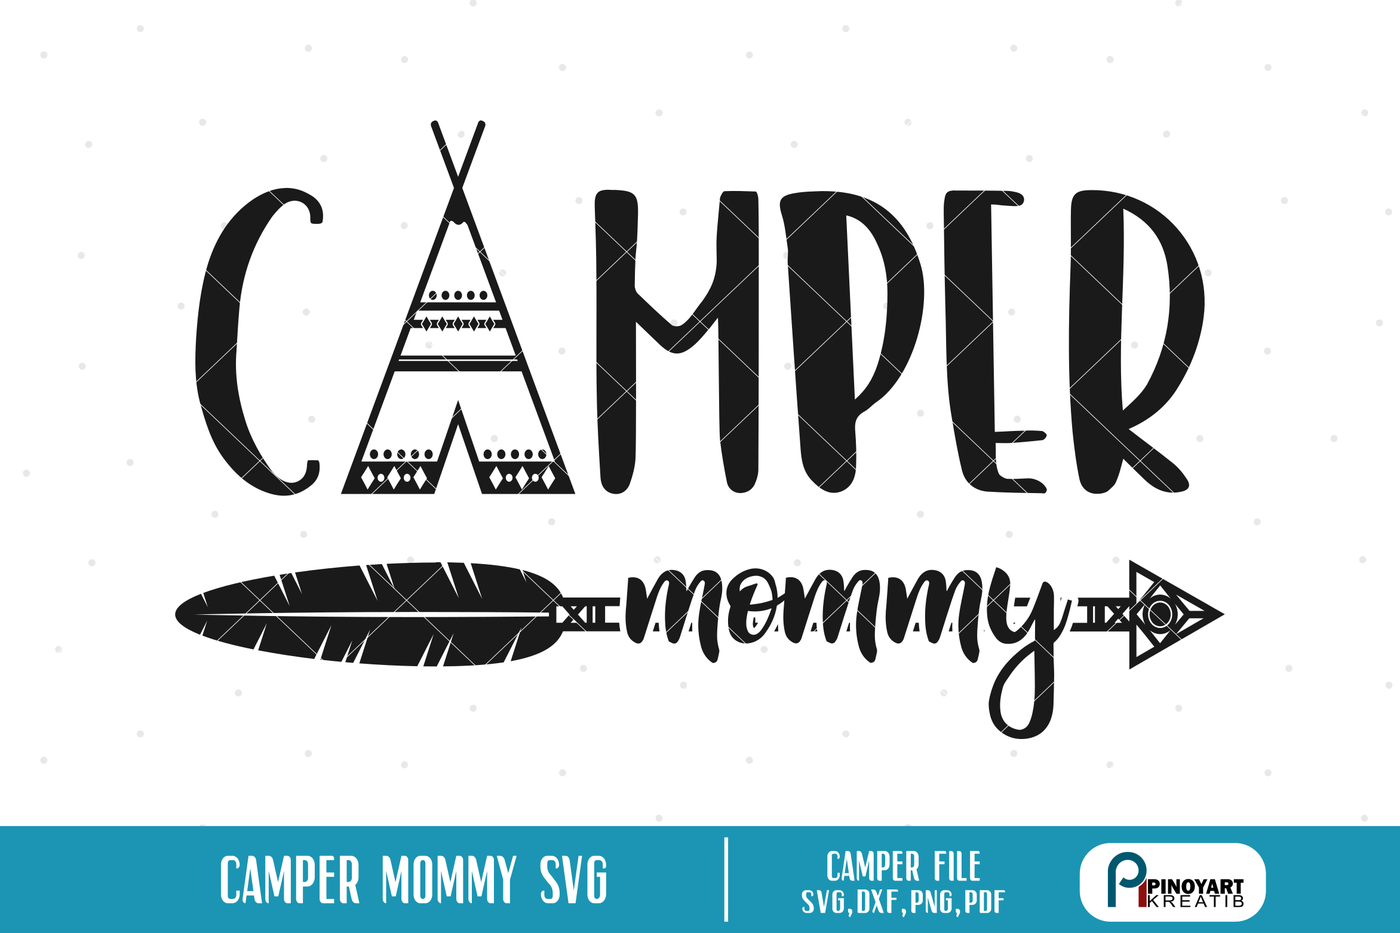 Camper Mommy Svg Camper Svg File Mommy Svg Camping Svg Camping Dxf By Pinoyart Thehungryjpeg Com